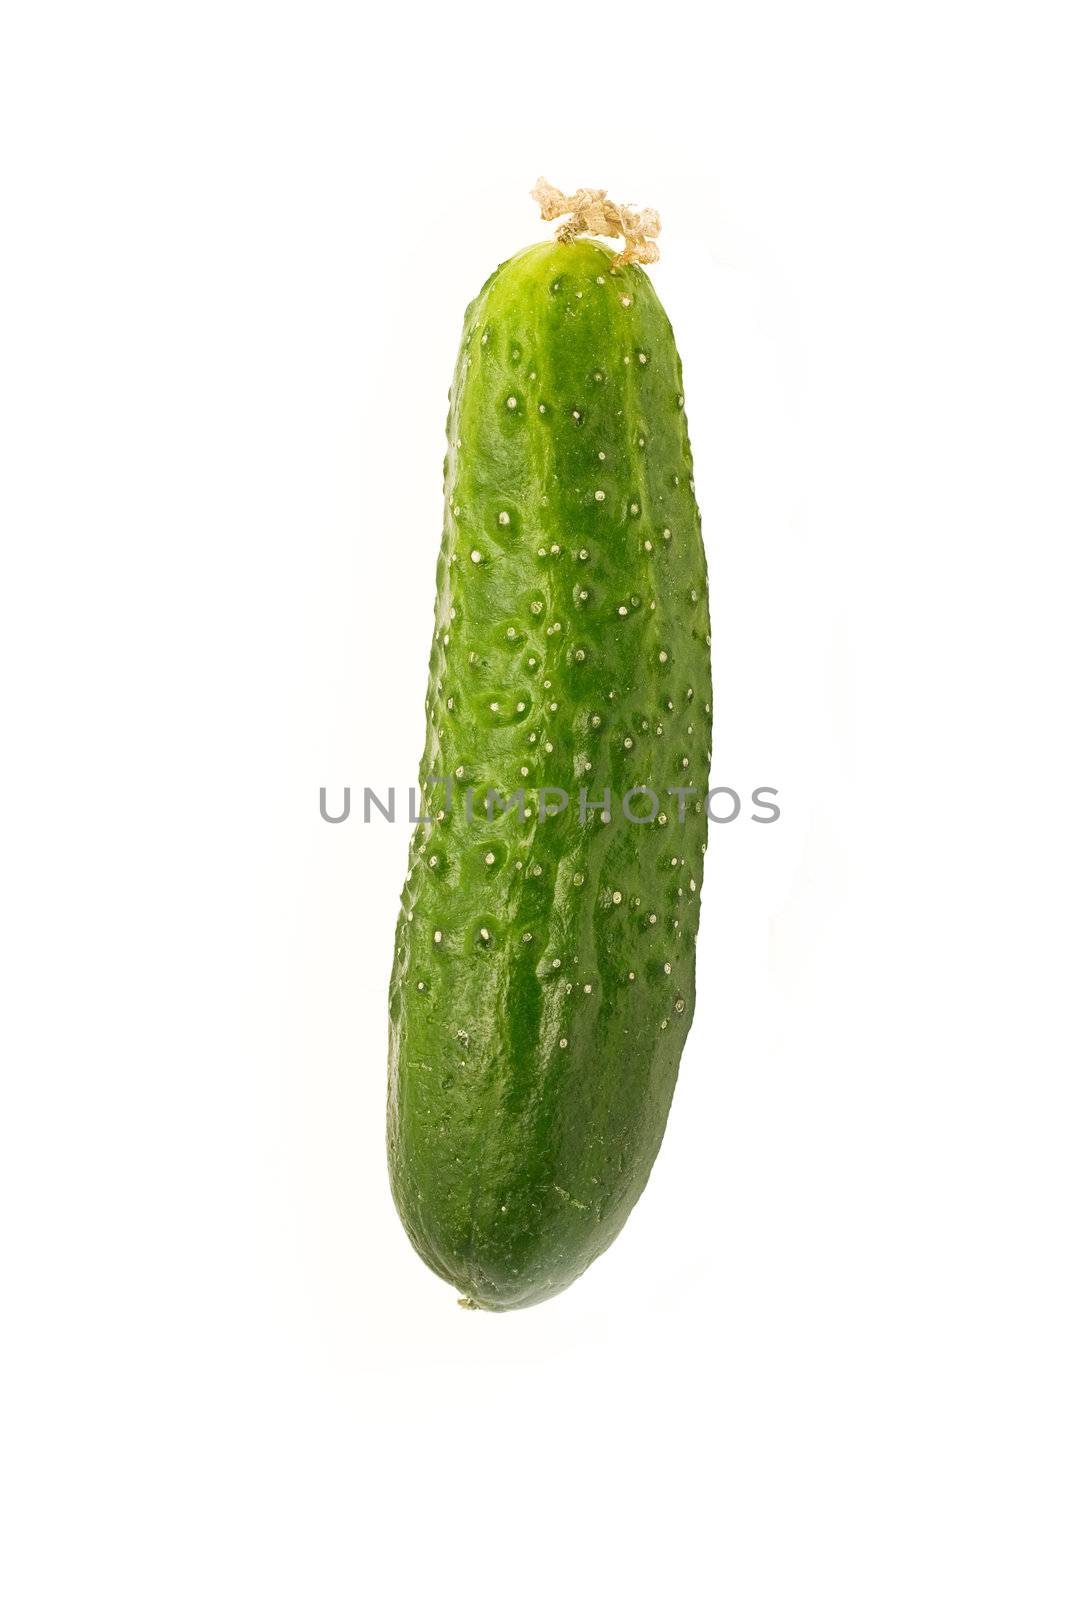  cucumber isolated on white background